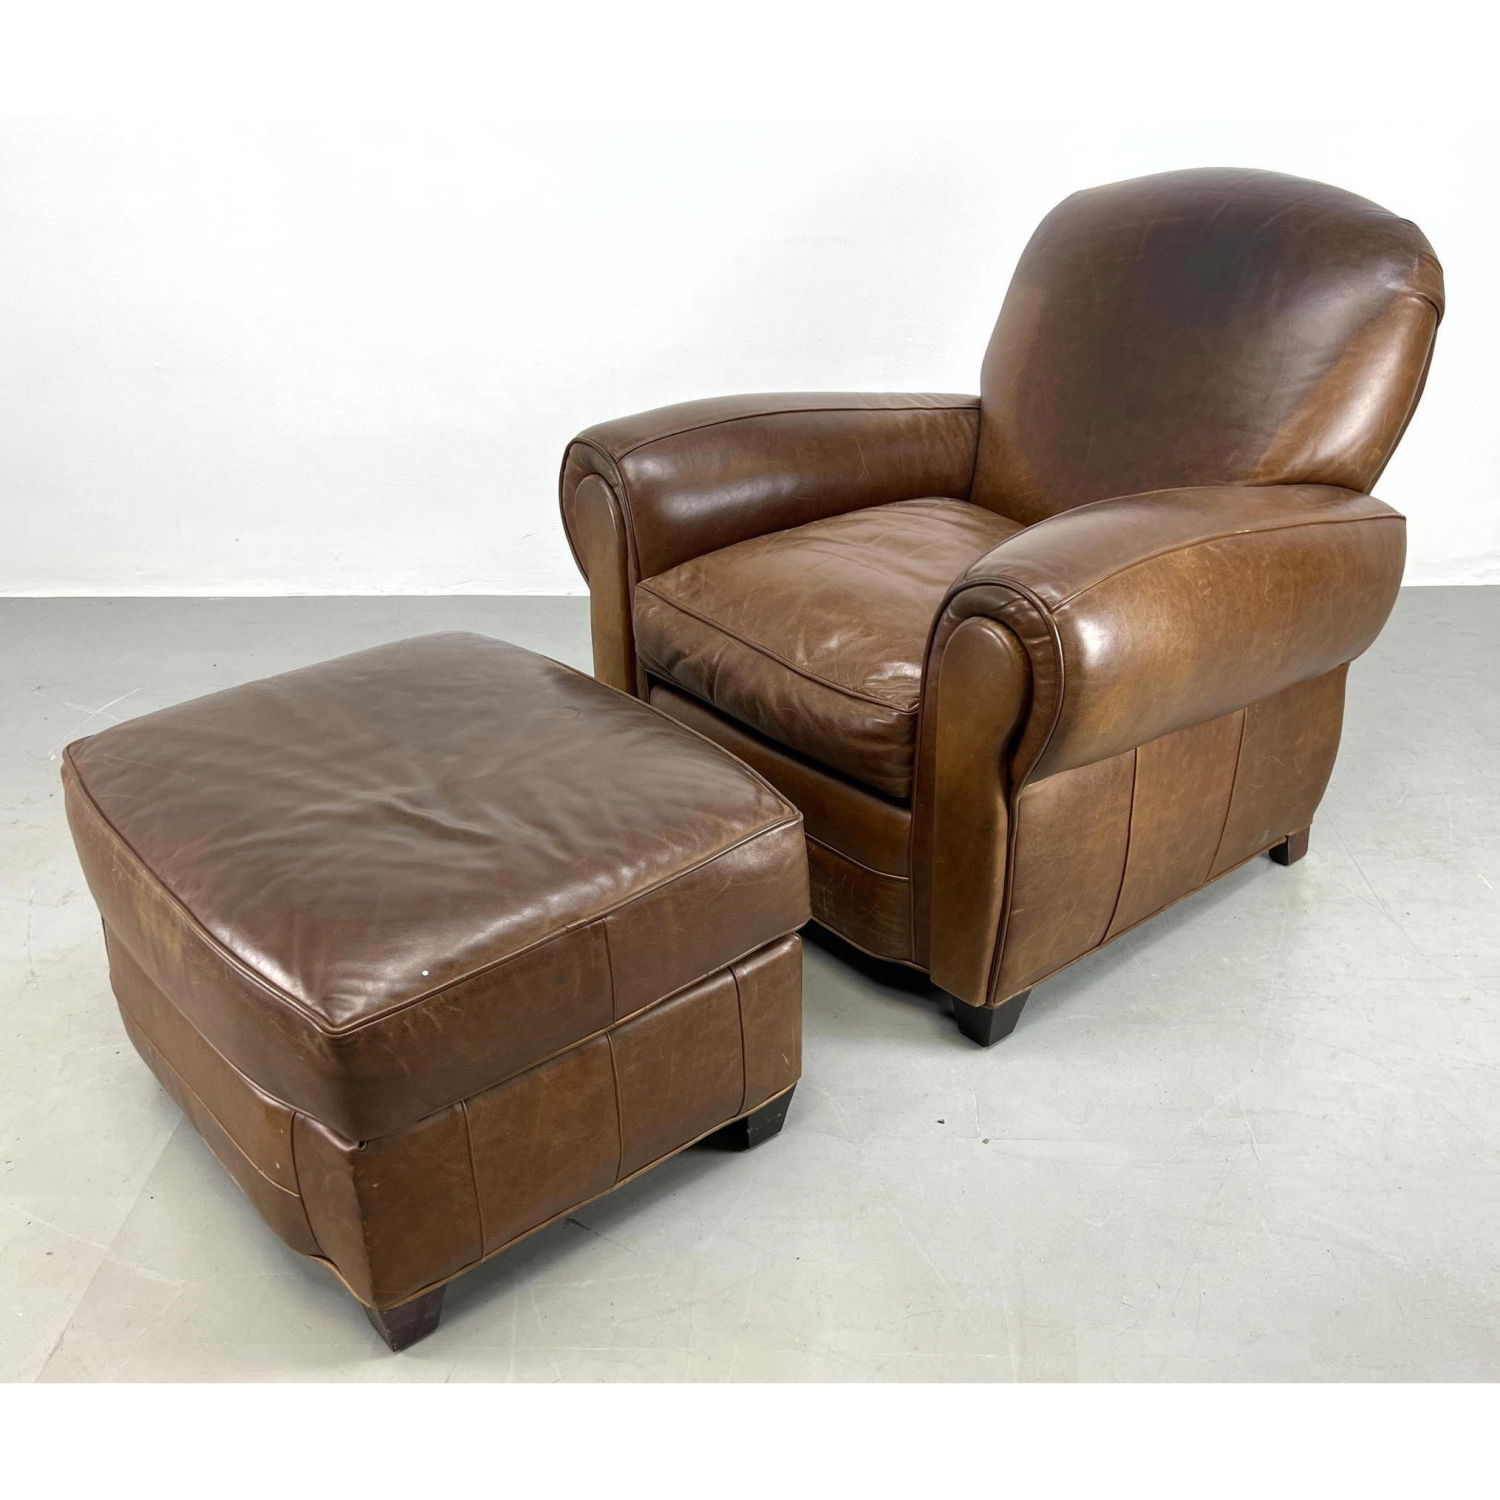 CLASSIC Leather Club Lounge Chair 2b93b8